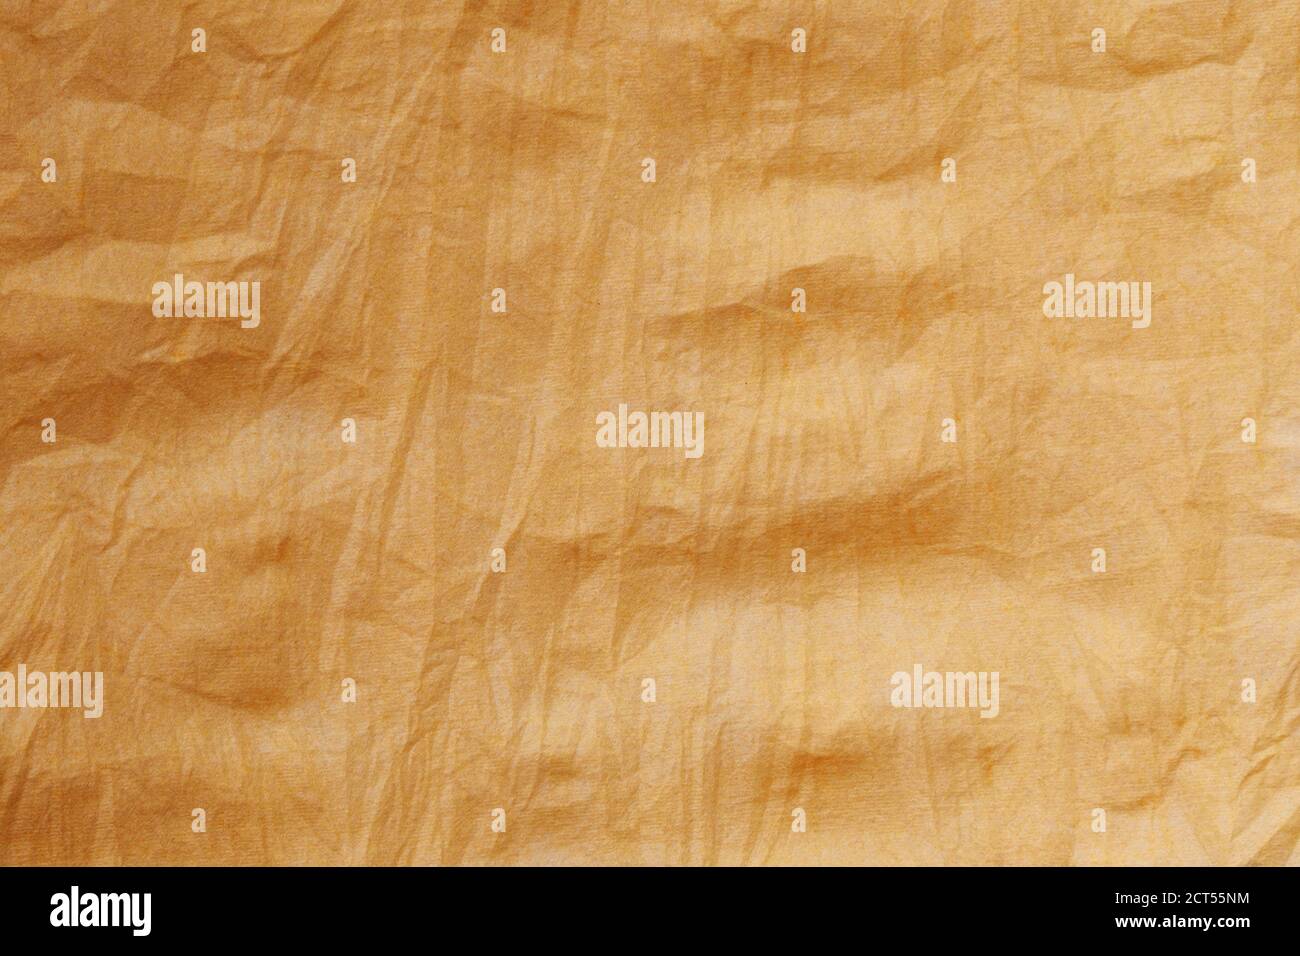 La textura de una servilleta textil desechable de color amarillo-dorado arrugada. Foto de stock